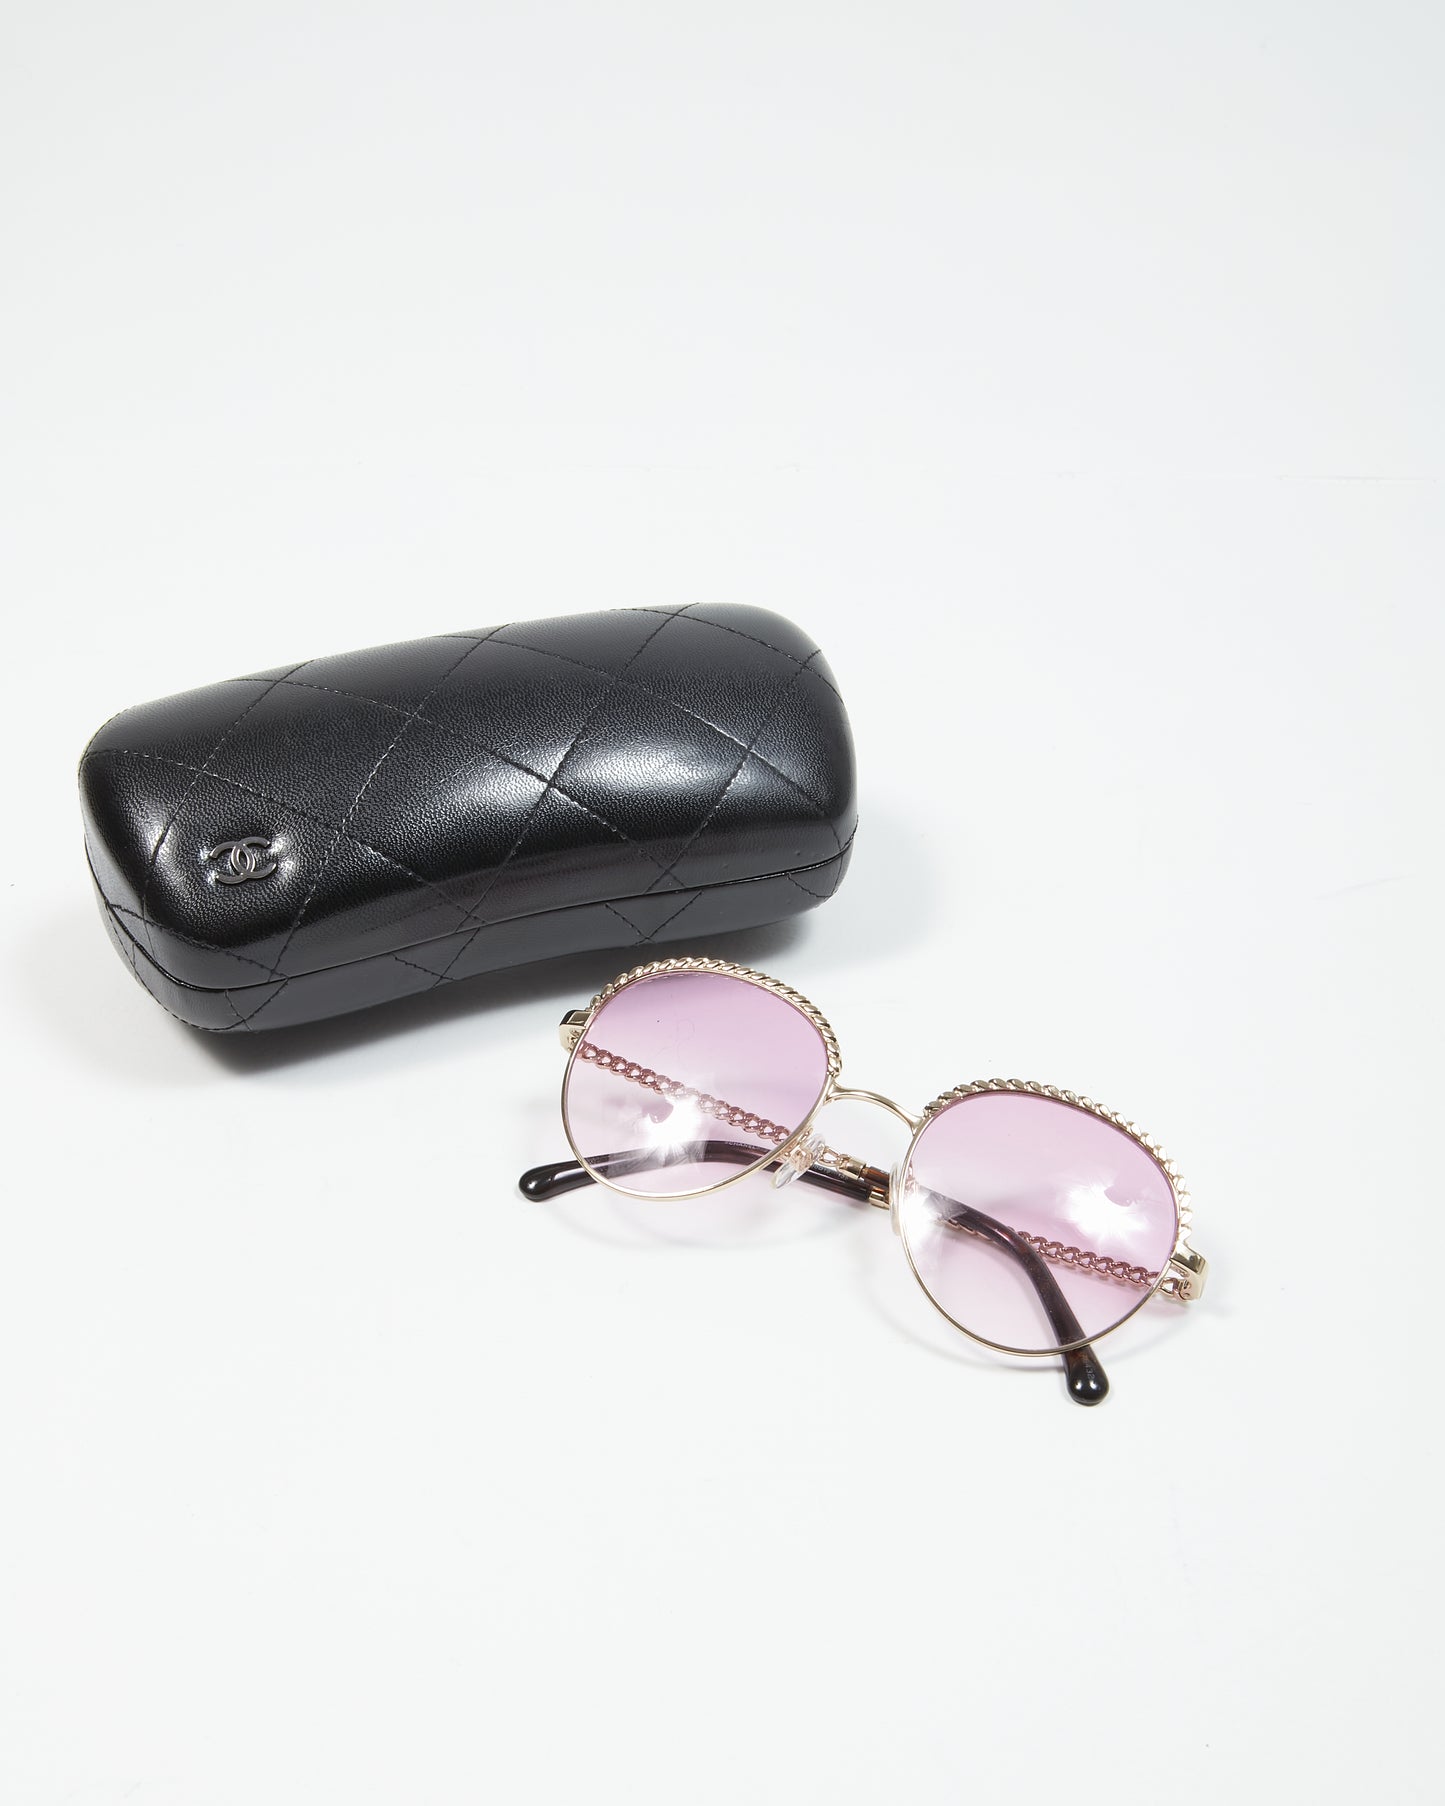 Chanel Pink Gradient Round Lense 2184 Sunglasses